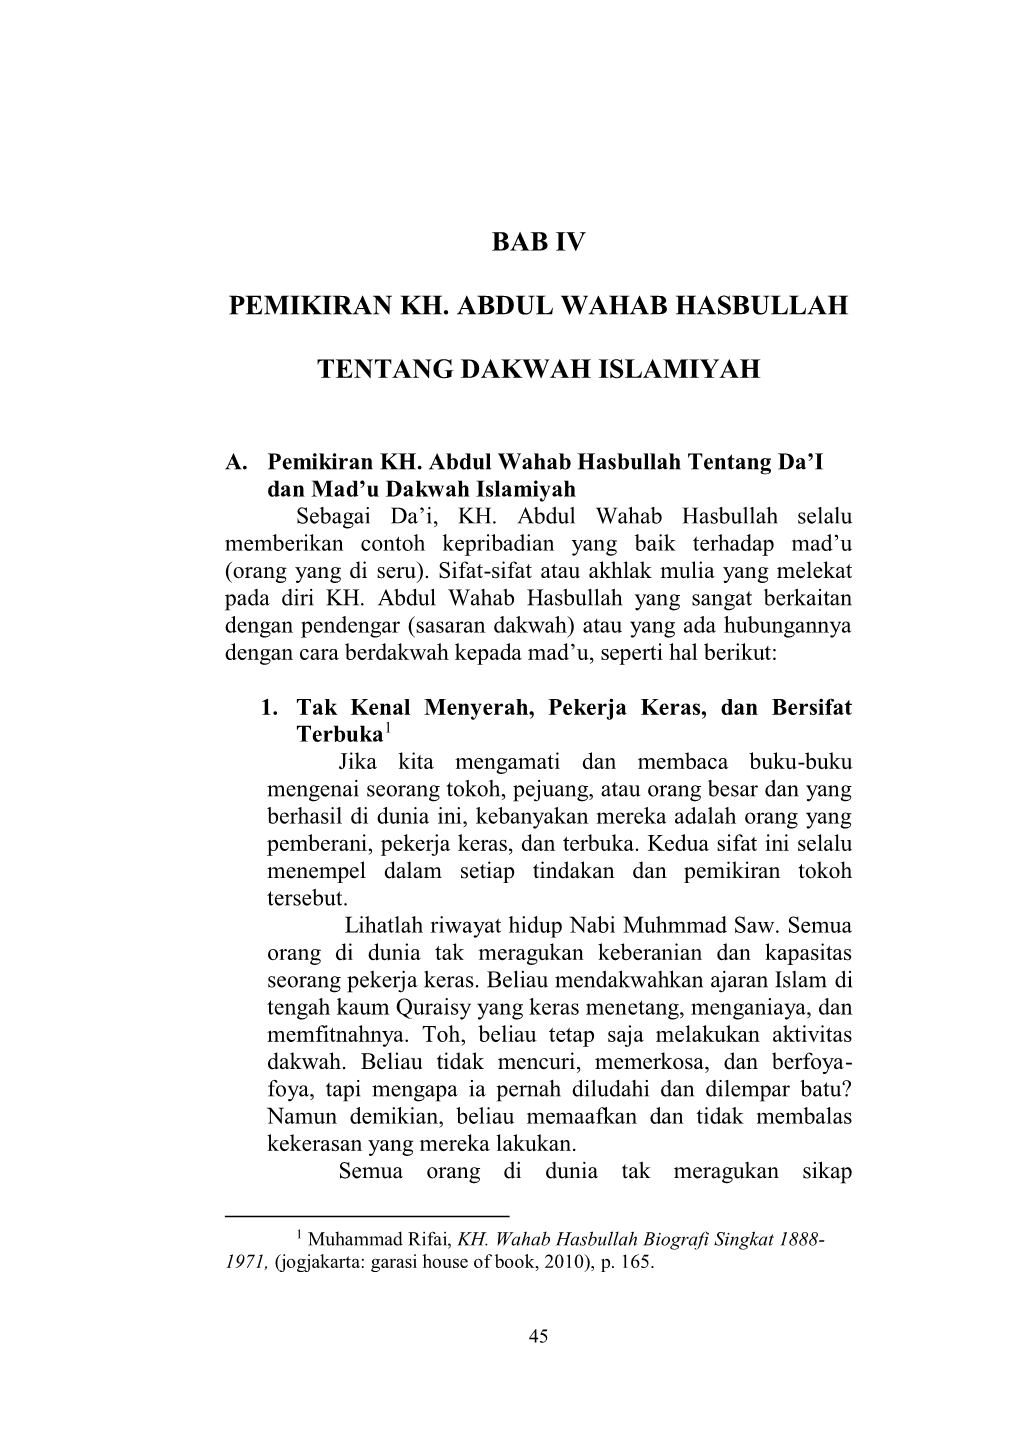 Bab Iv Pemikiran Kh. Abdul Wahab Hasbullah Tentang Dakwah Islamiyah